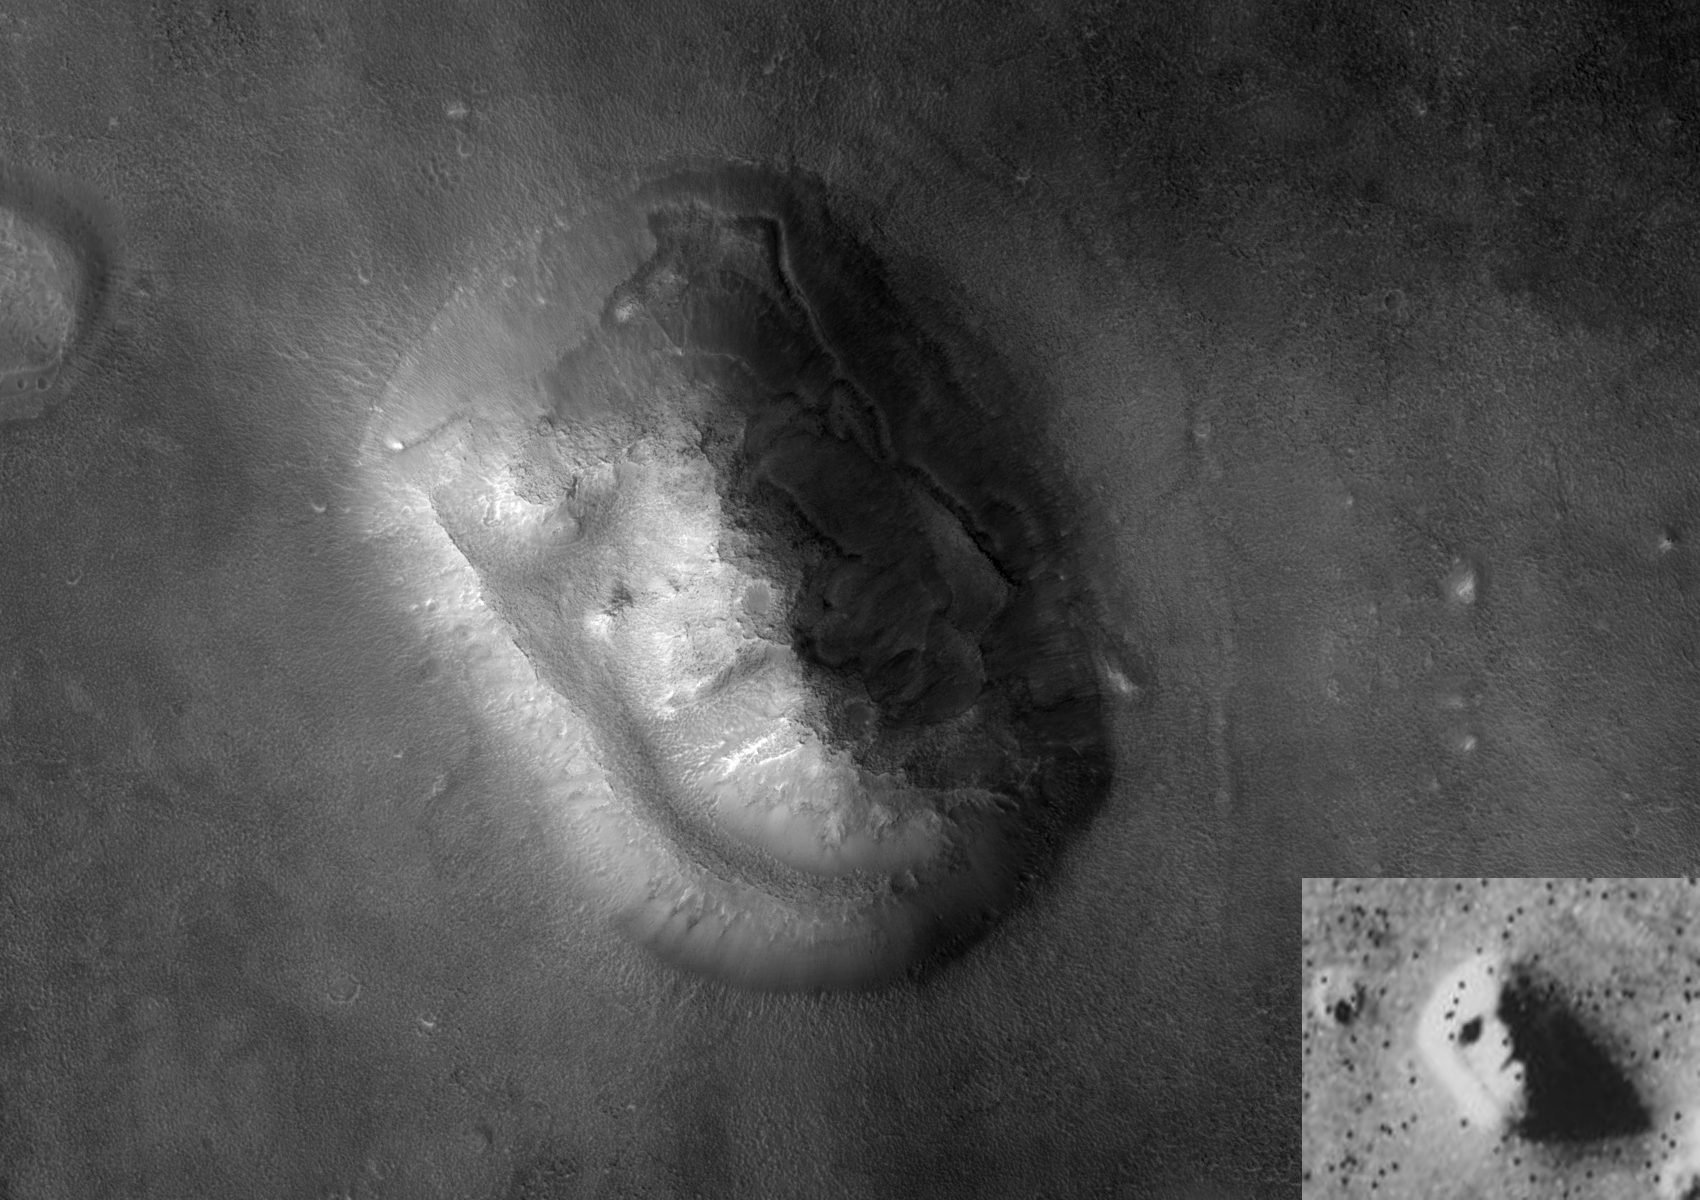 Face of Mars
그림 출처: https://en.wikipedia.org/wiki/Cydonia_(region_of_Mars)